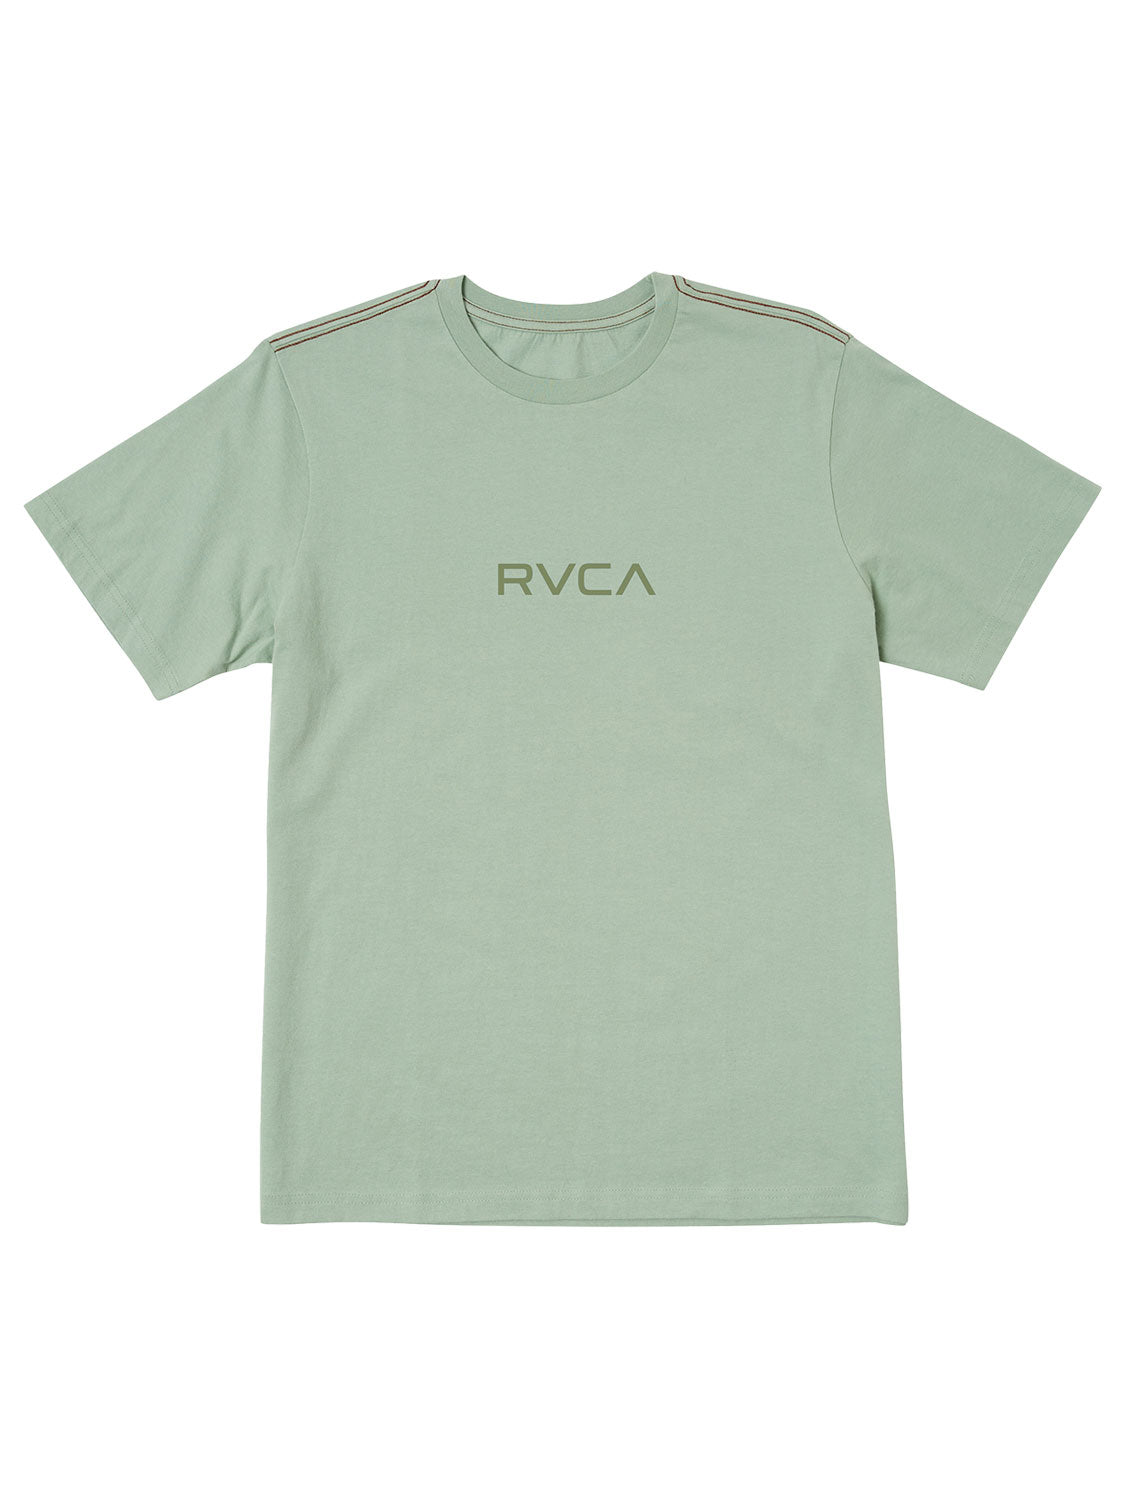 RVCA Men's Flock T-Shirt